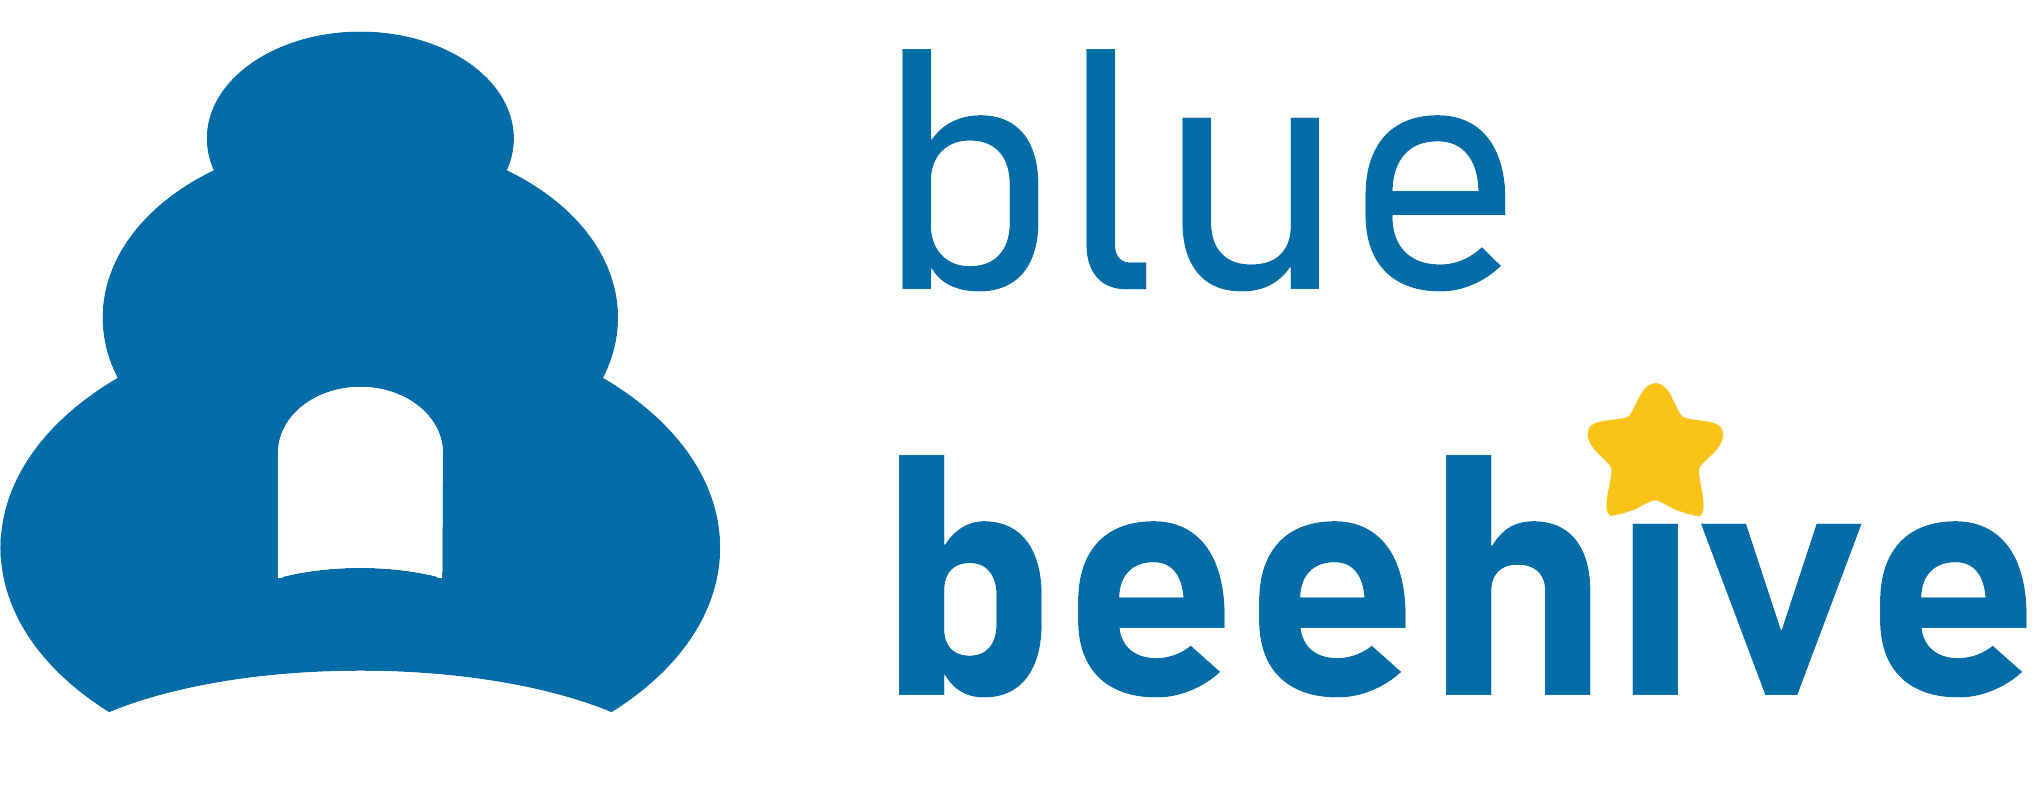 logo Blue Beehive300dpi kopia